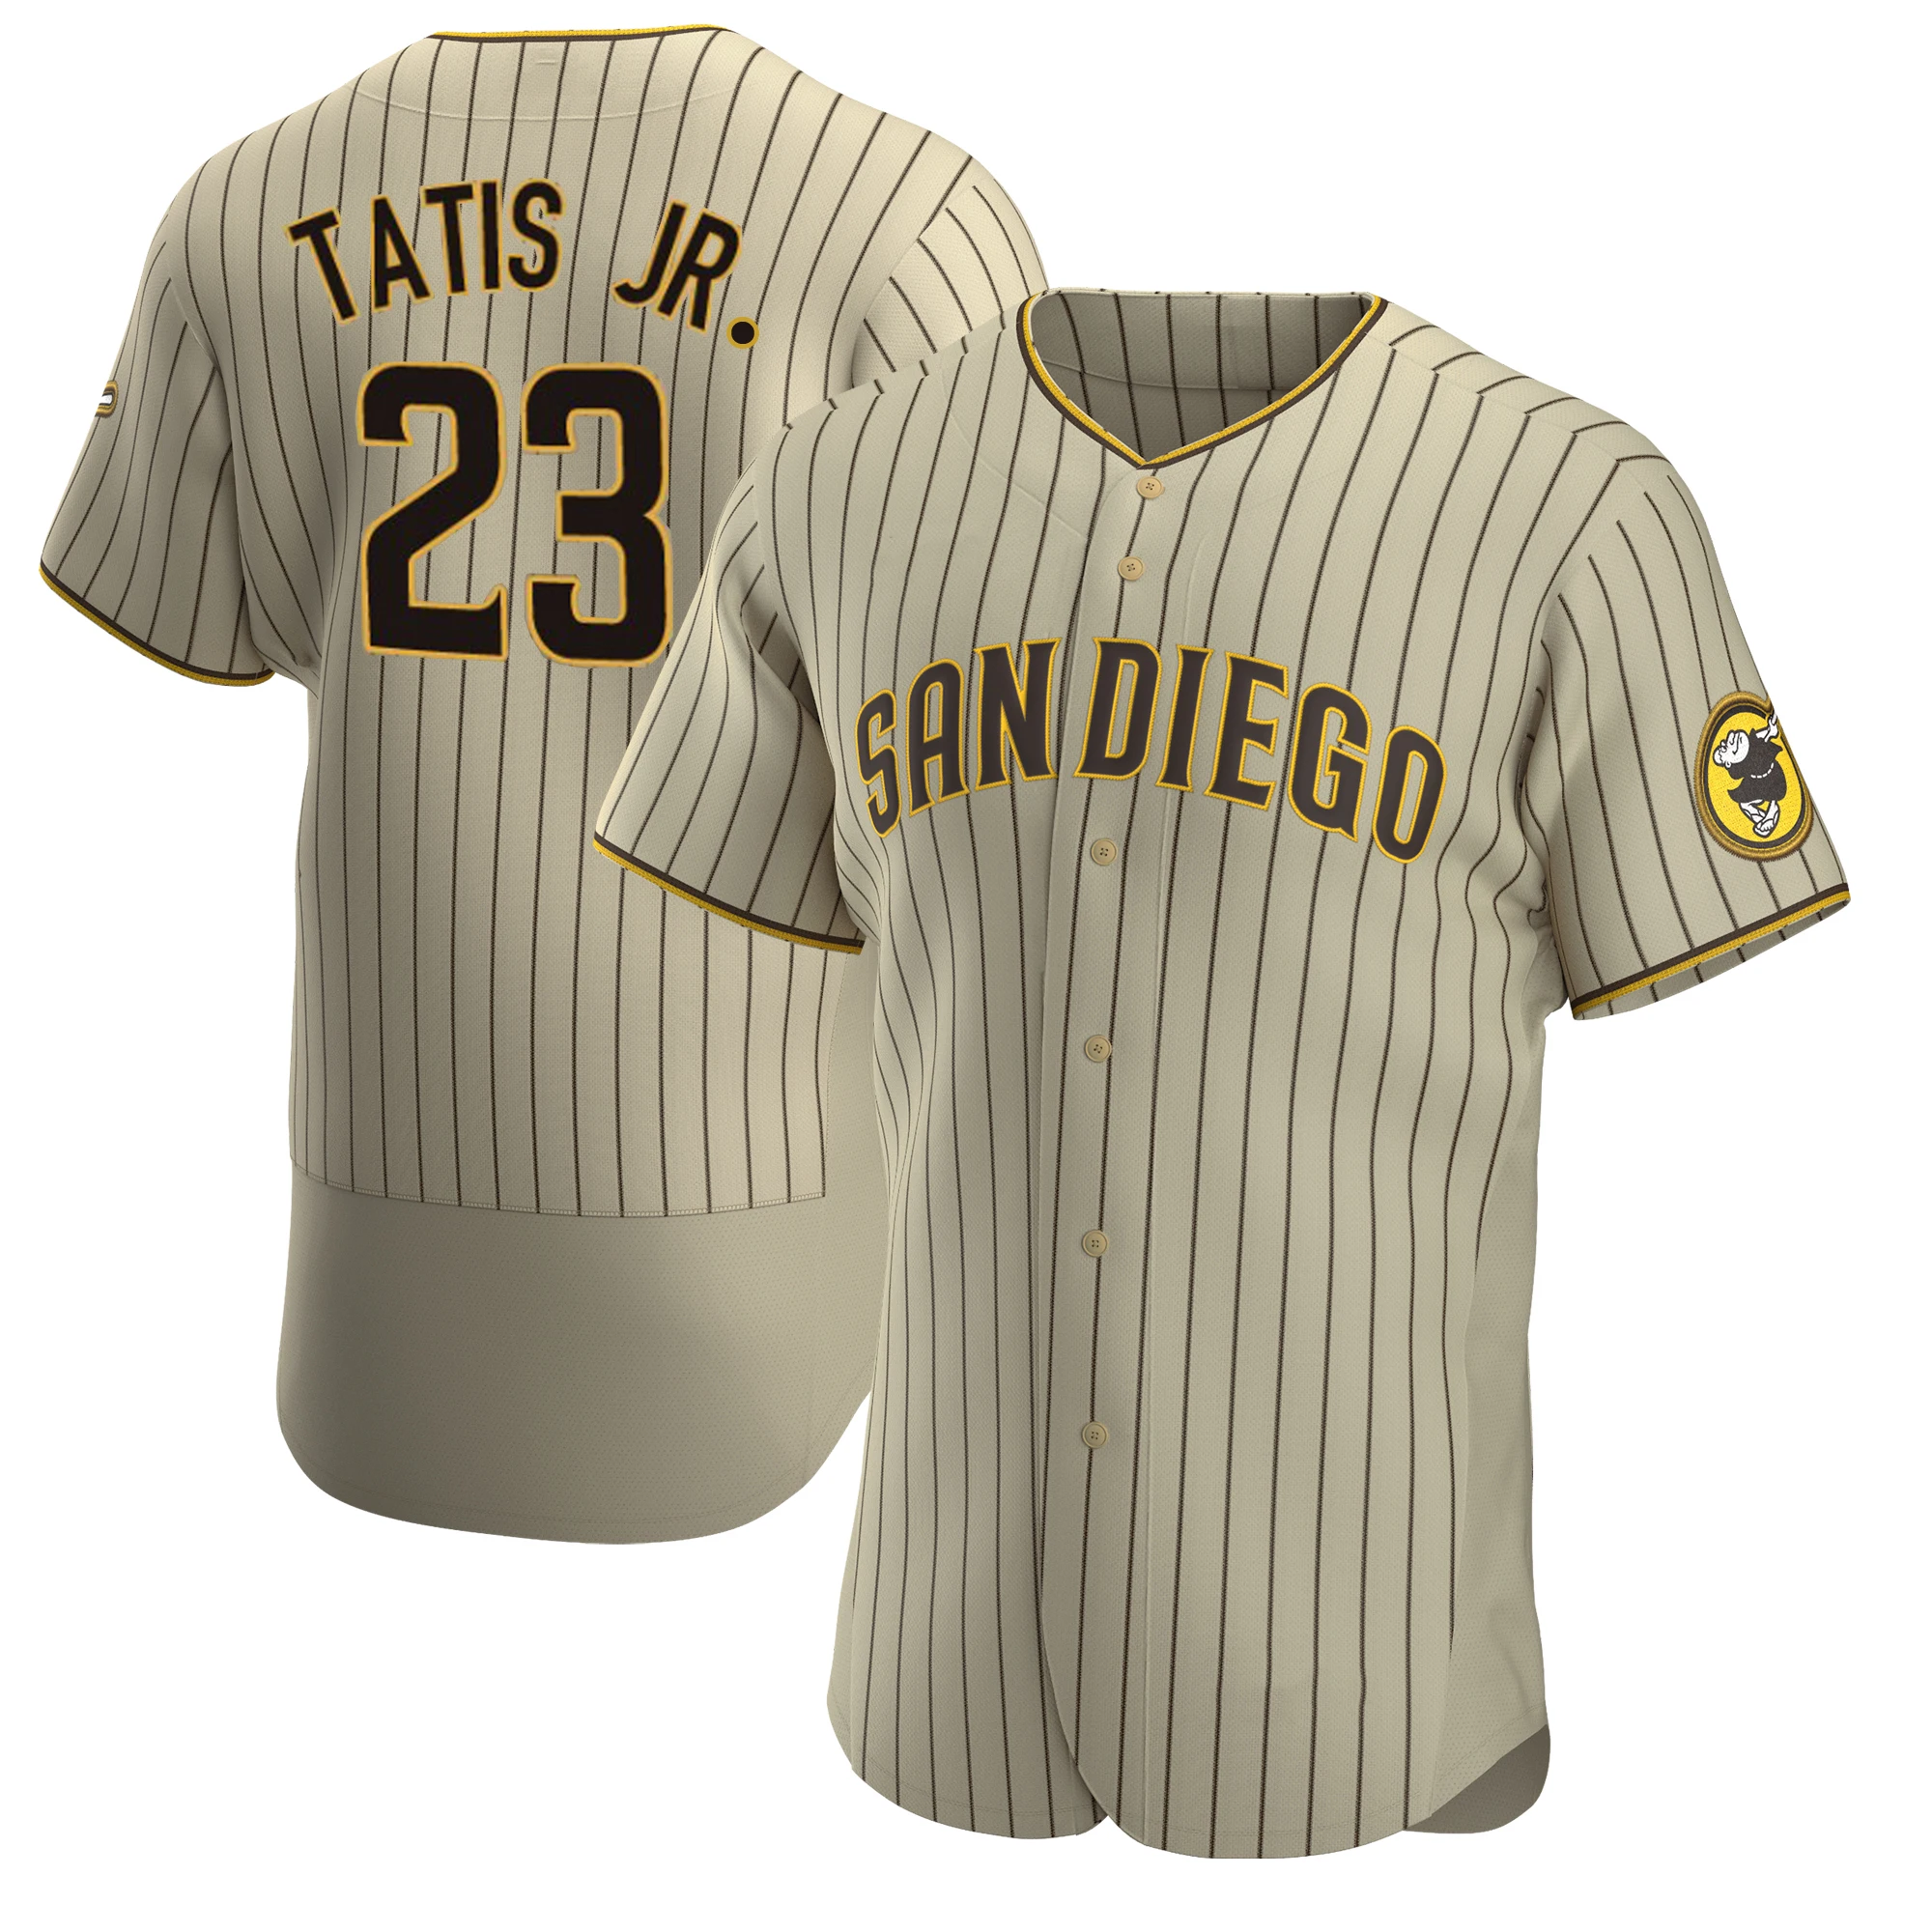 Estin1989 — Los Angeles Dodgers jersey (alt gold)